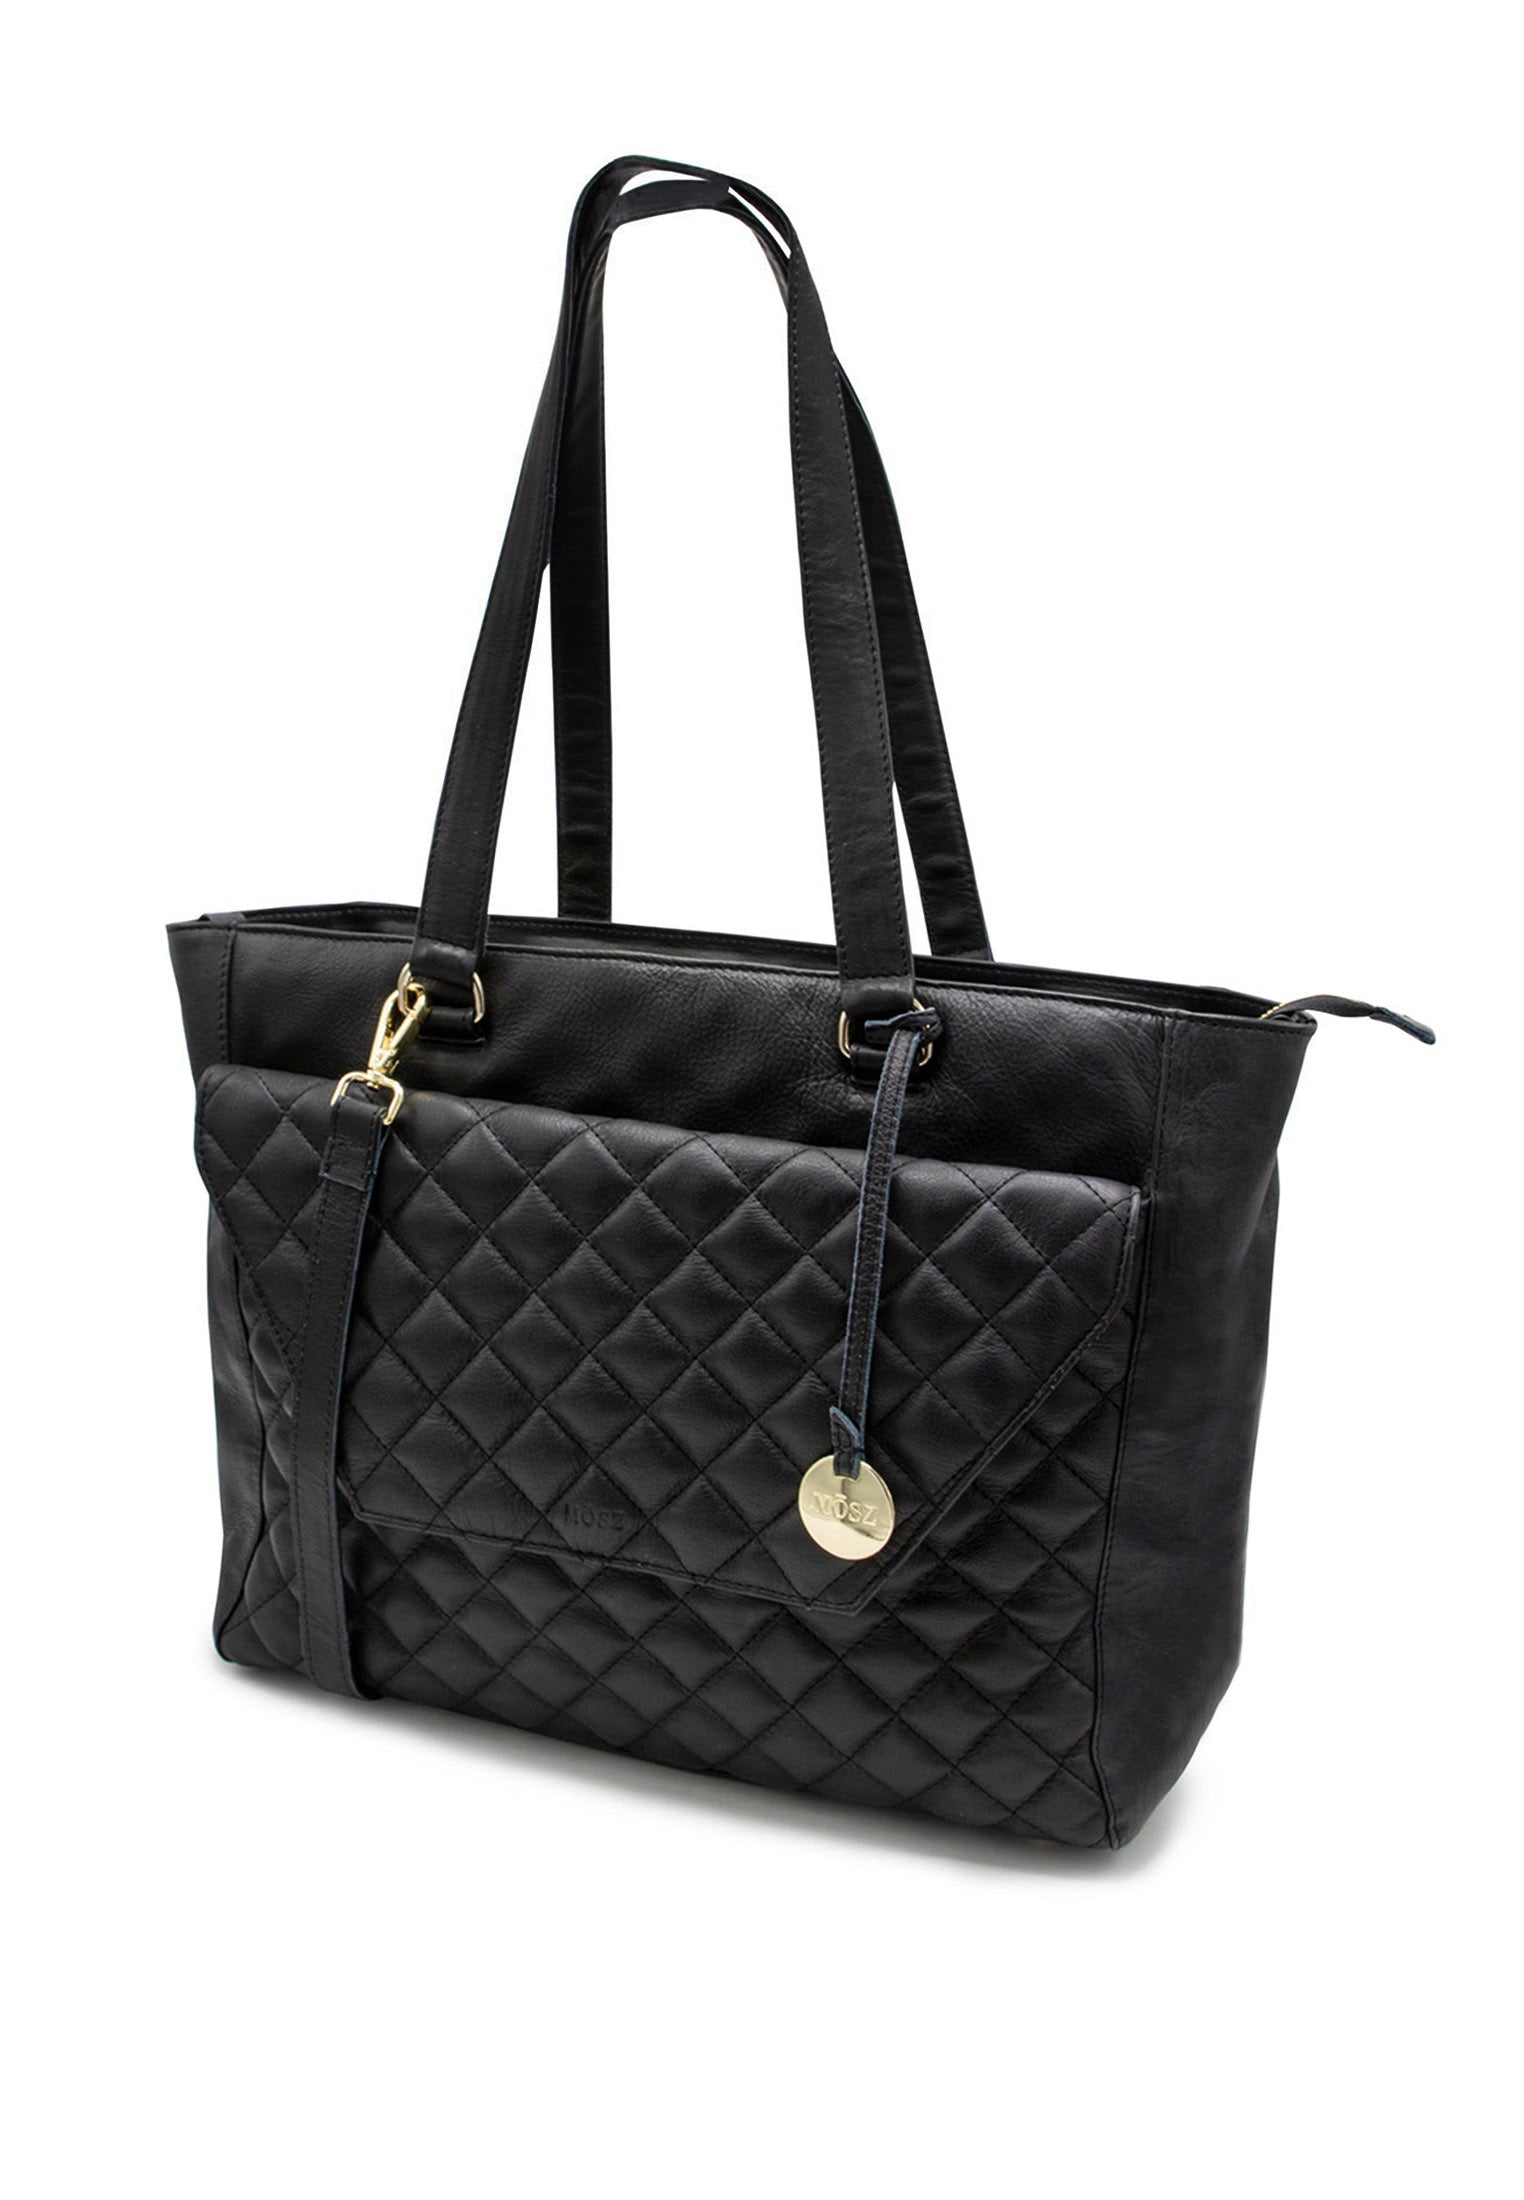 Leather laptop bag ladies 15.6 inch - black quilted - MŌSZ Denise